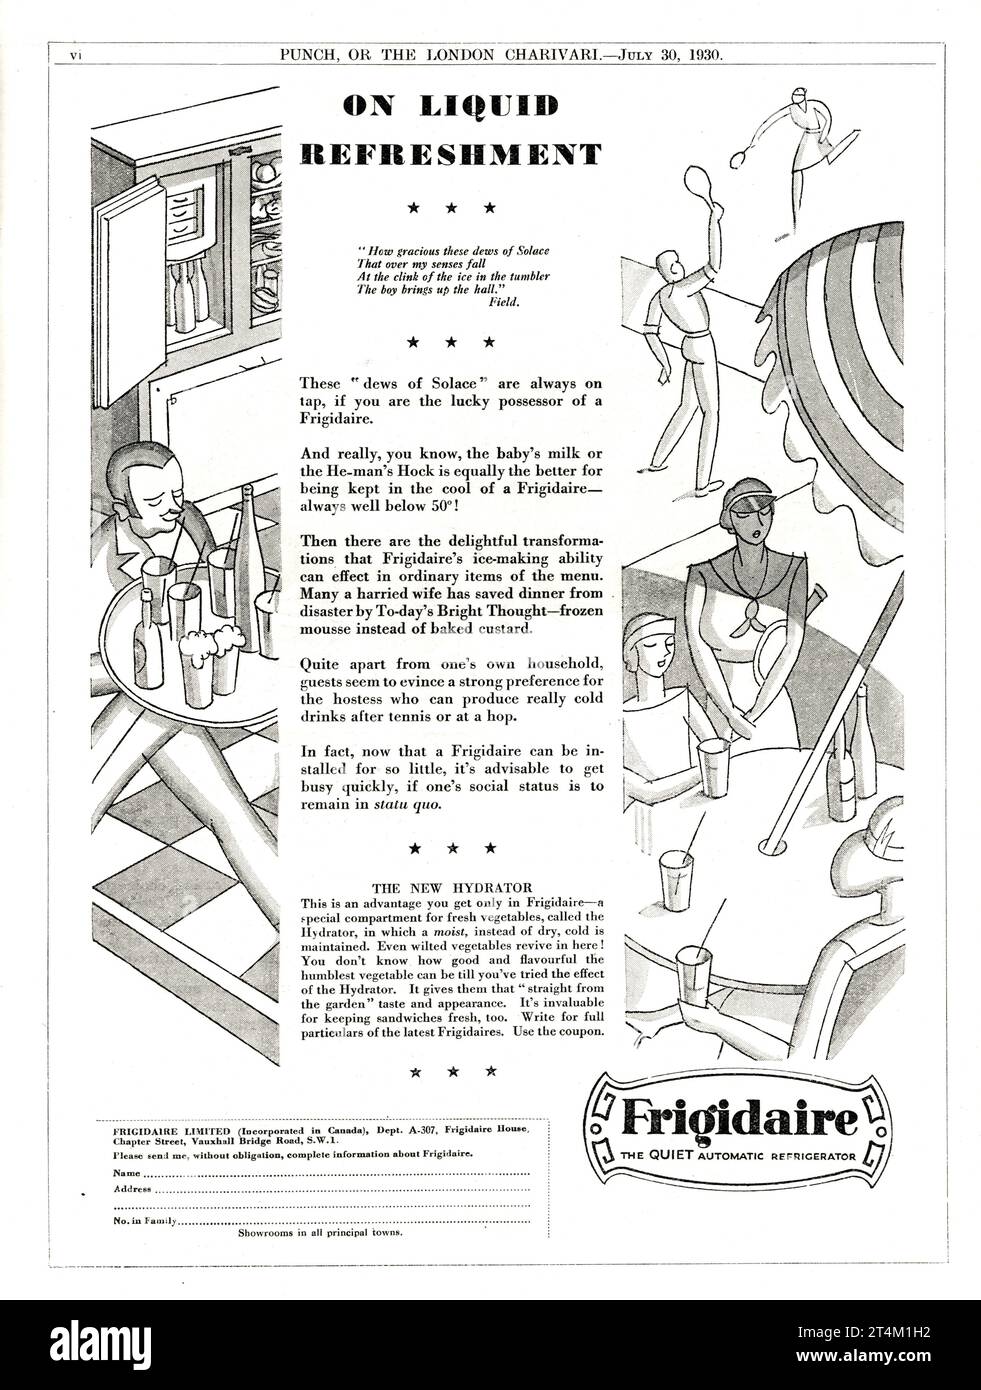 FRIGIDAIRE The QUIET Automatic Refrigerator 1930 British Magazine Advertisement Stock Photo